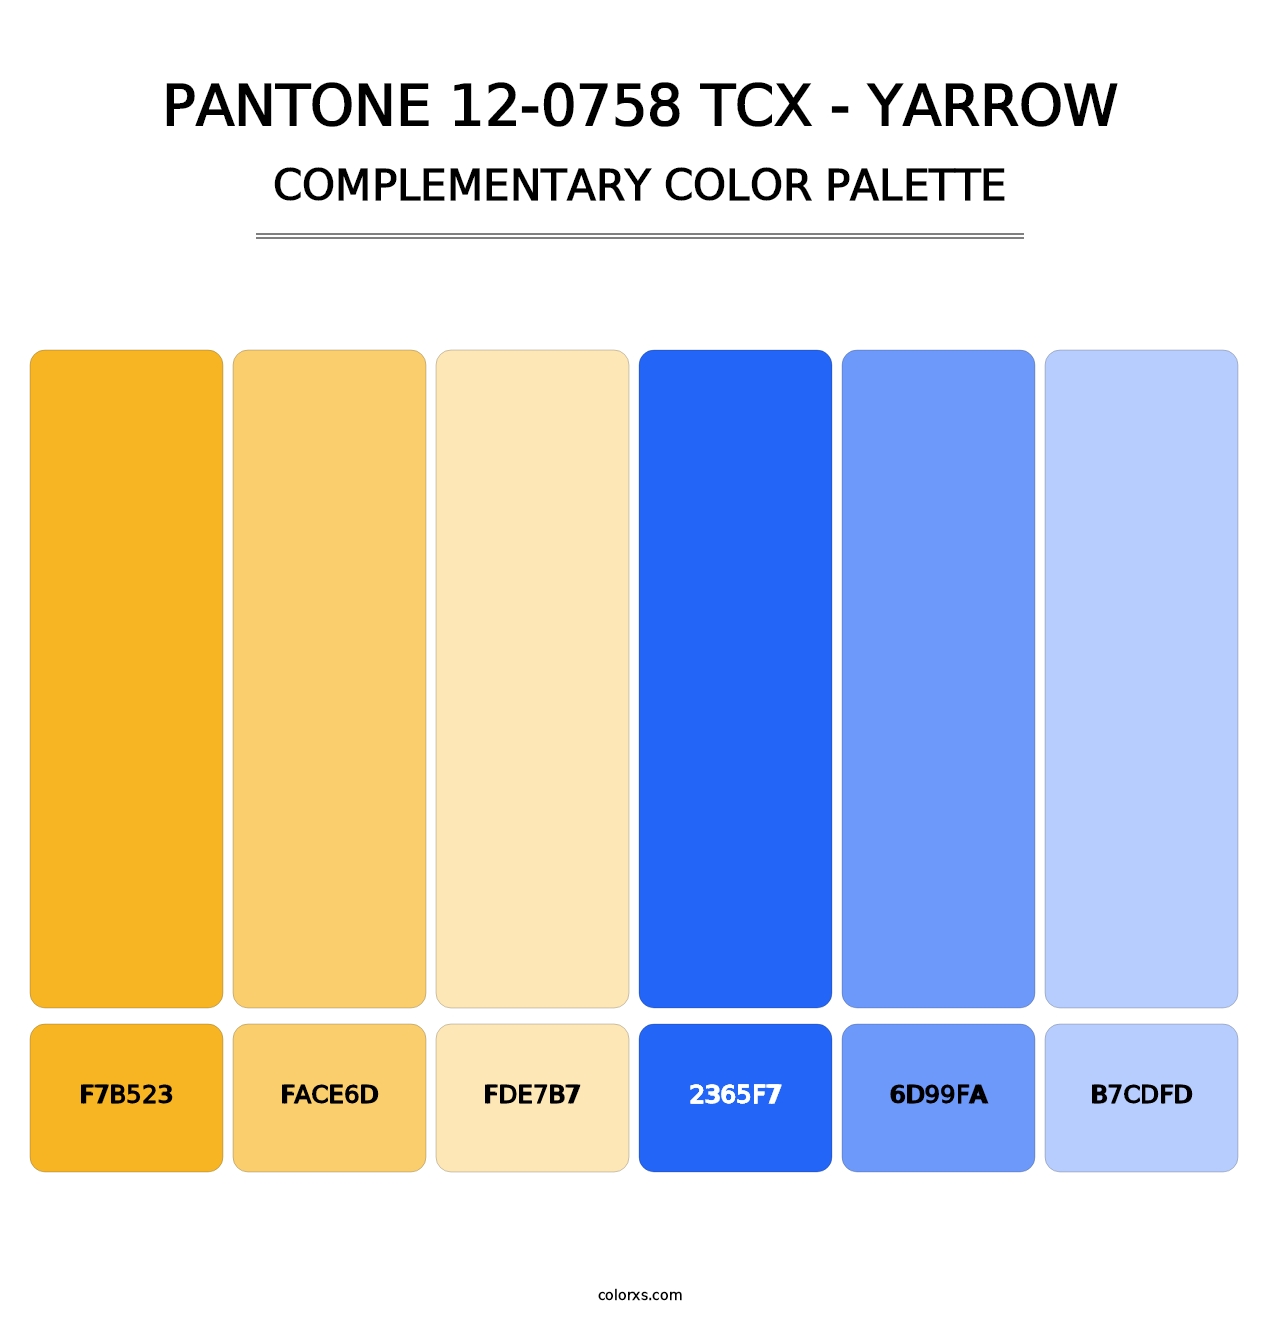 PANTONE 12-0758 TCX - Yarrow - Complementary Color Palette